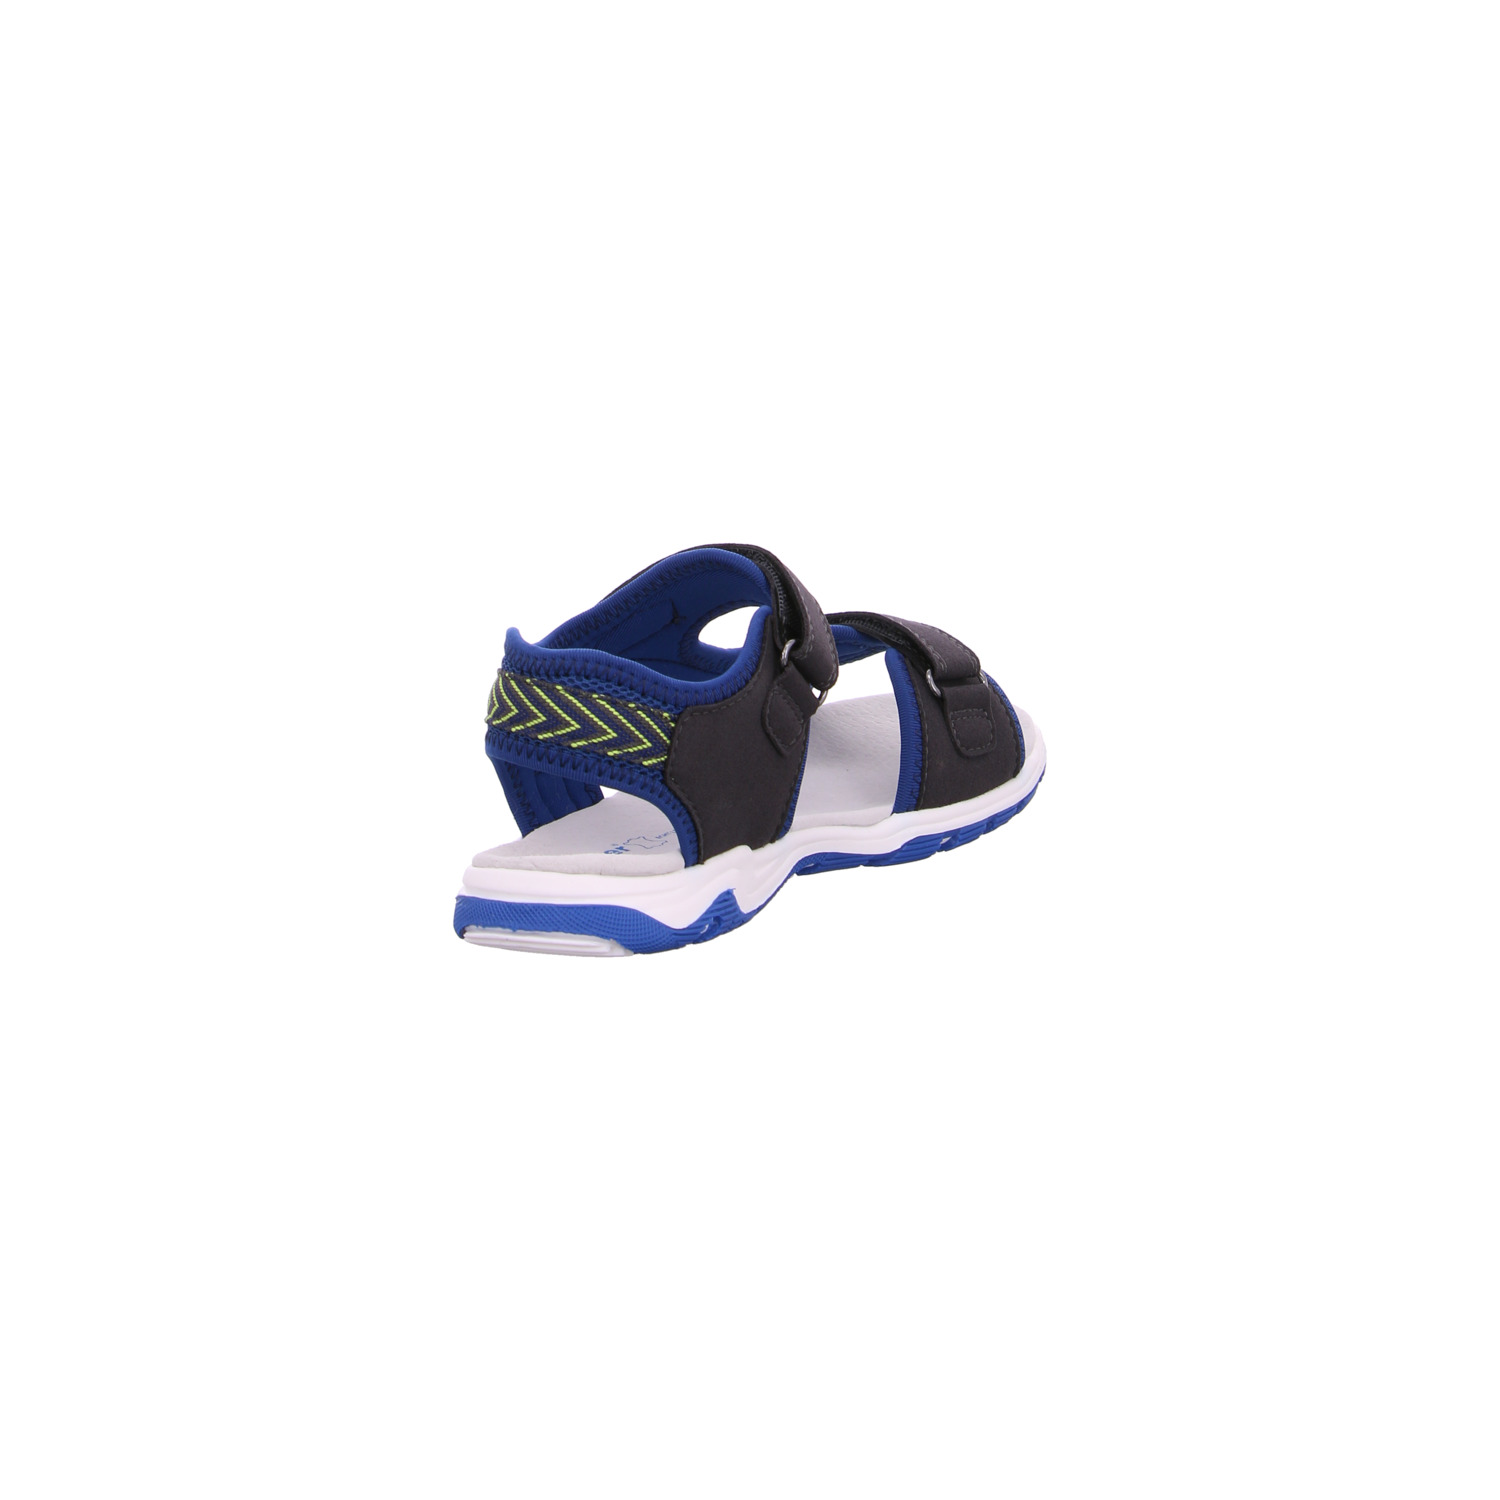 richter-kinder-sandaletten-jungen-blau-119797-26